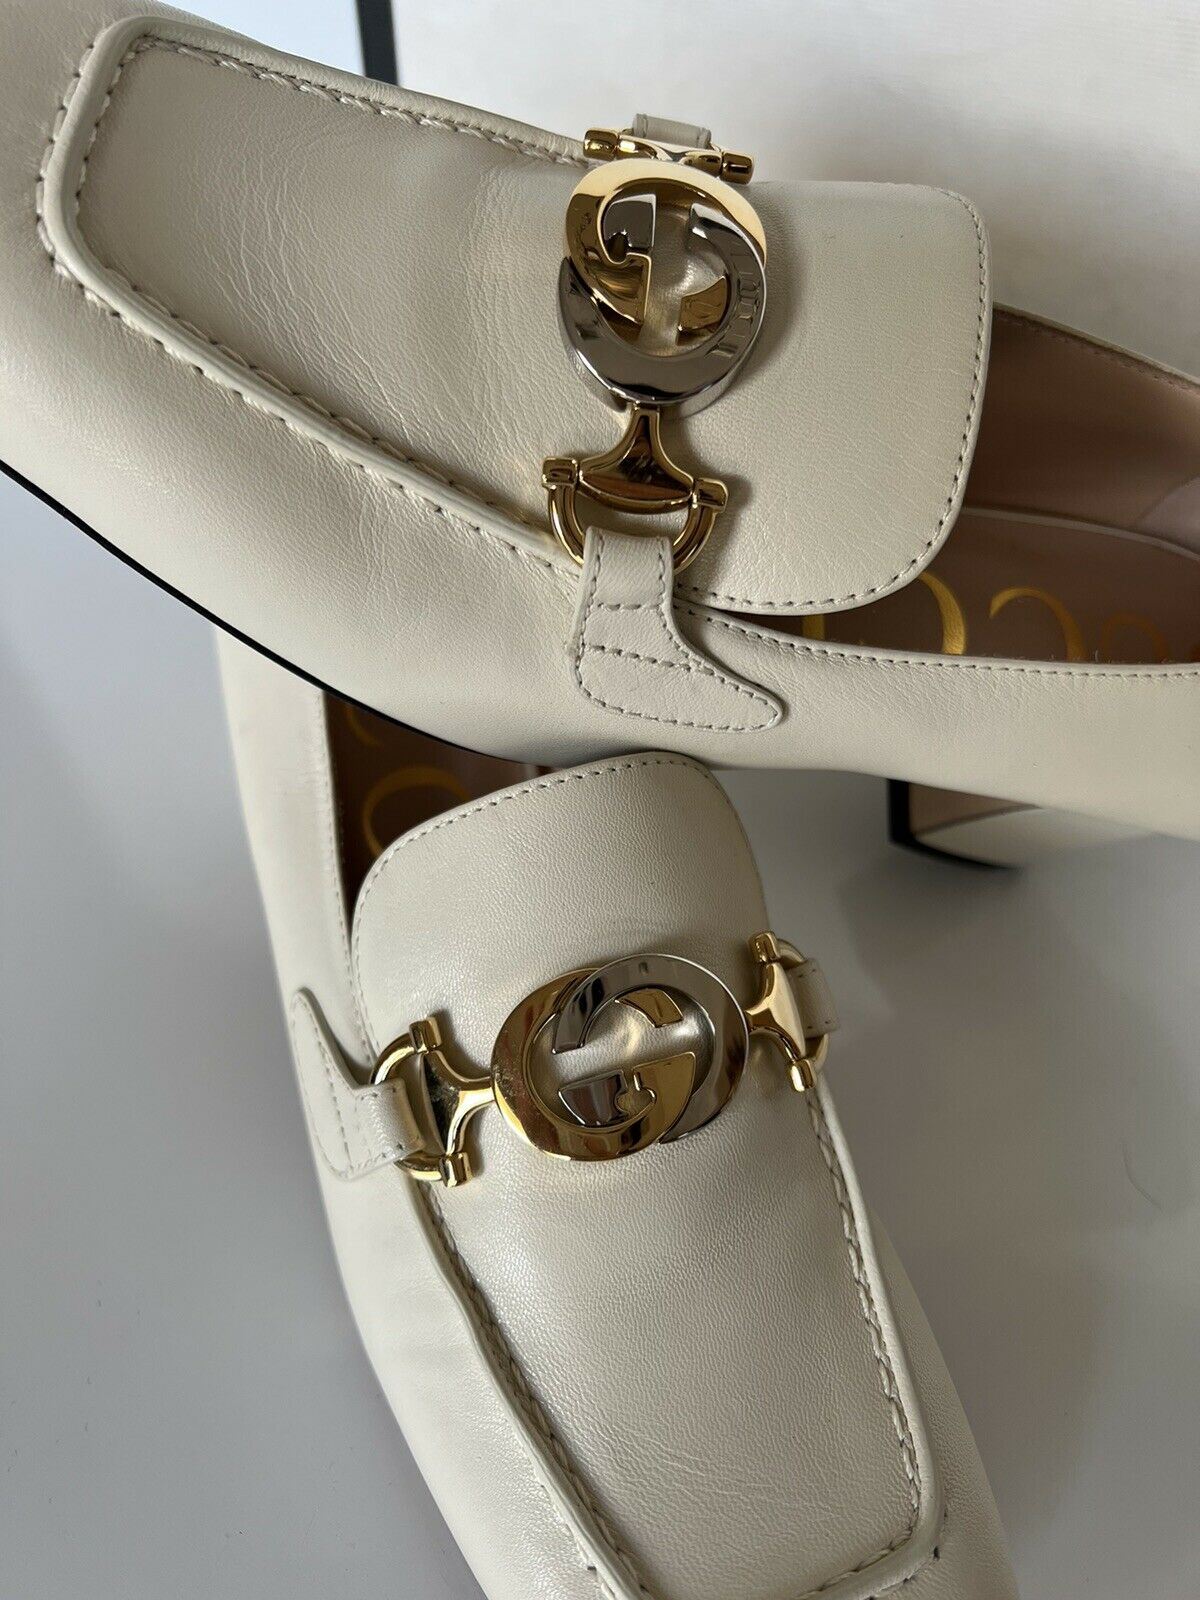 NIB $890 Gucci Malaga Pump Leather Mystic White Shoes 9 US (39 Euro)  IT 575832